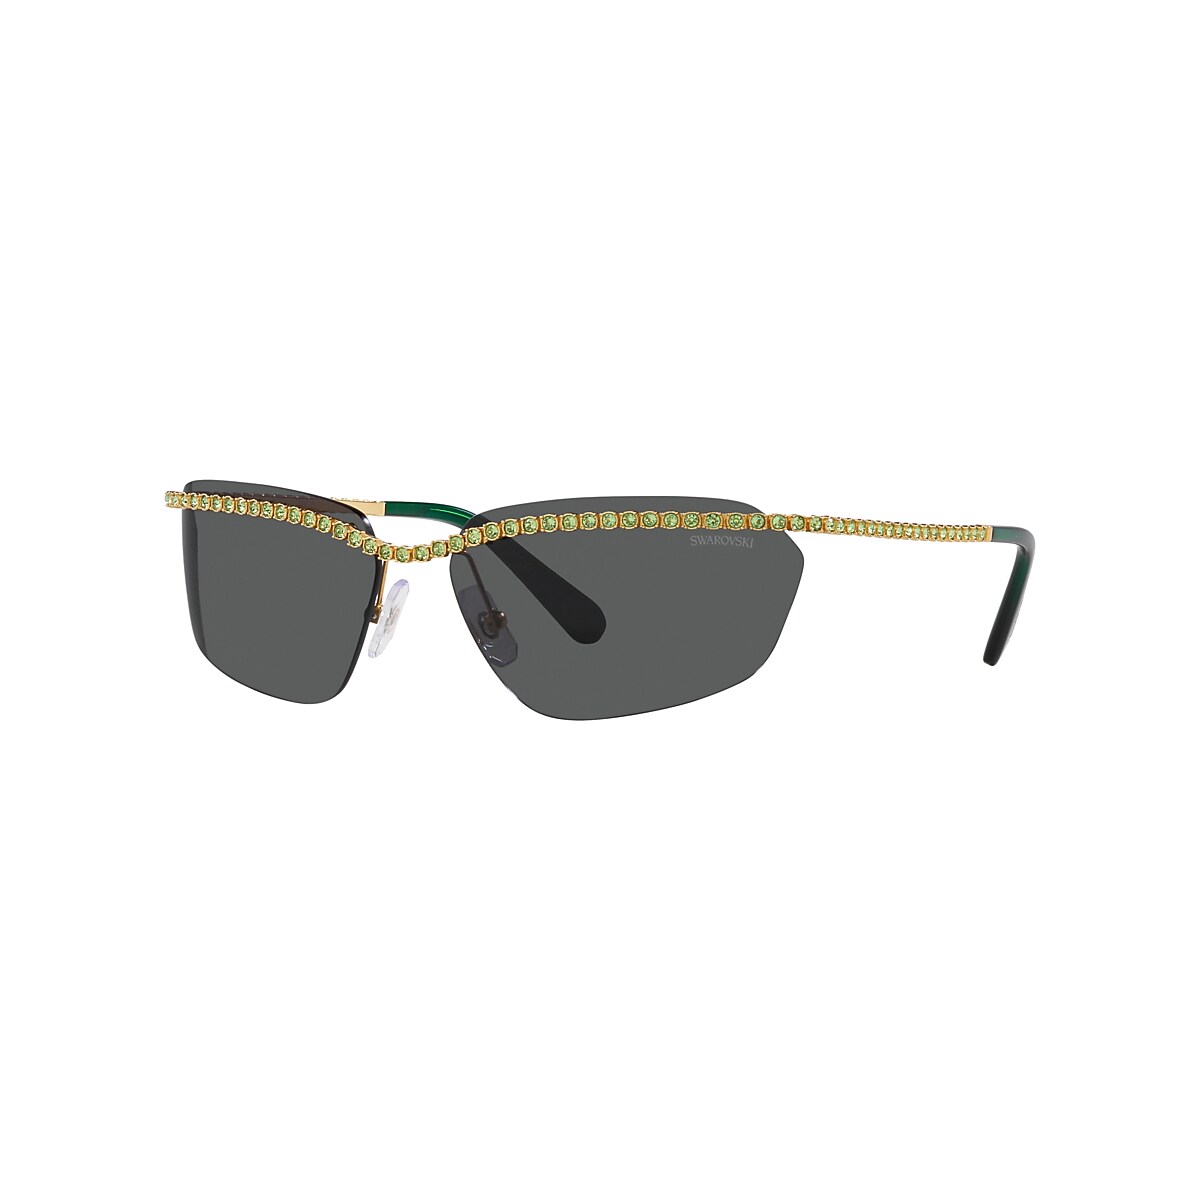 Swarovski SK7001 64 Dark Grey & Gold Sunglasses